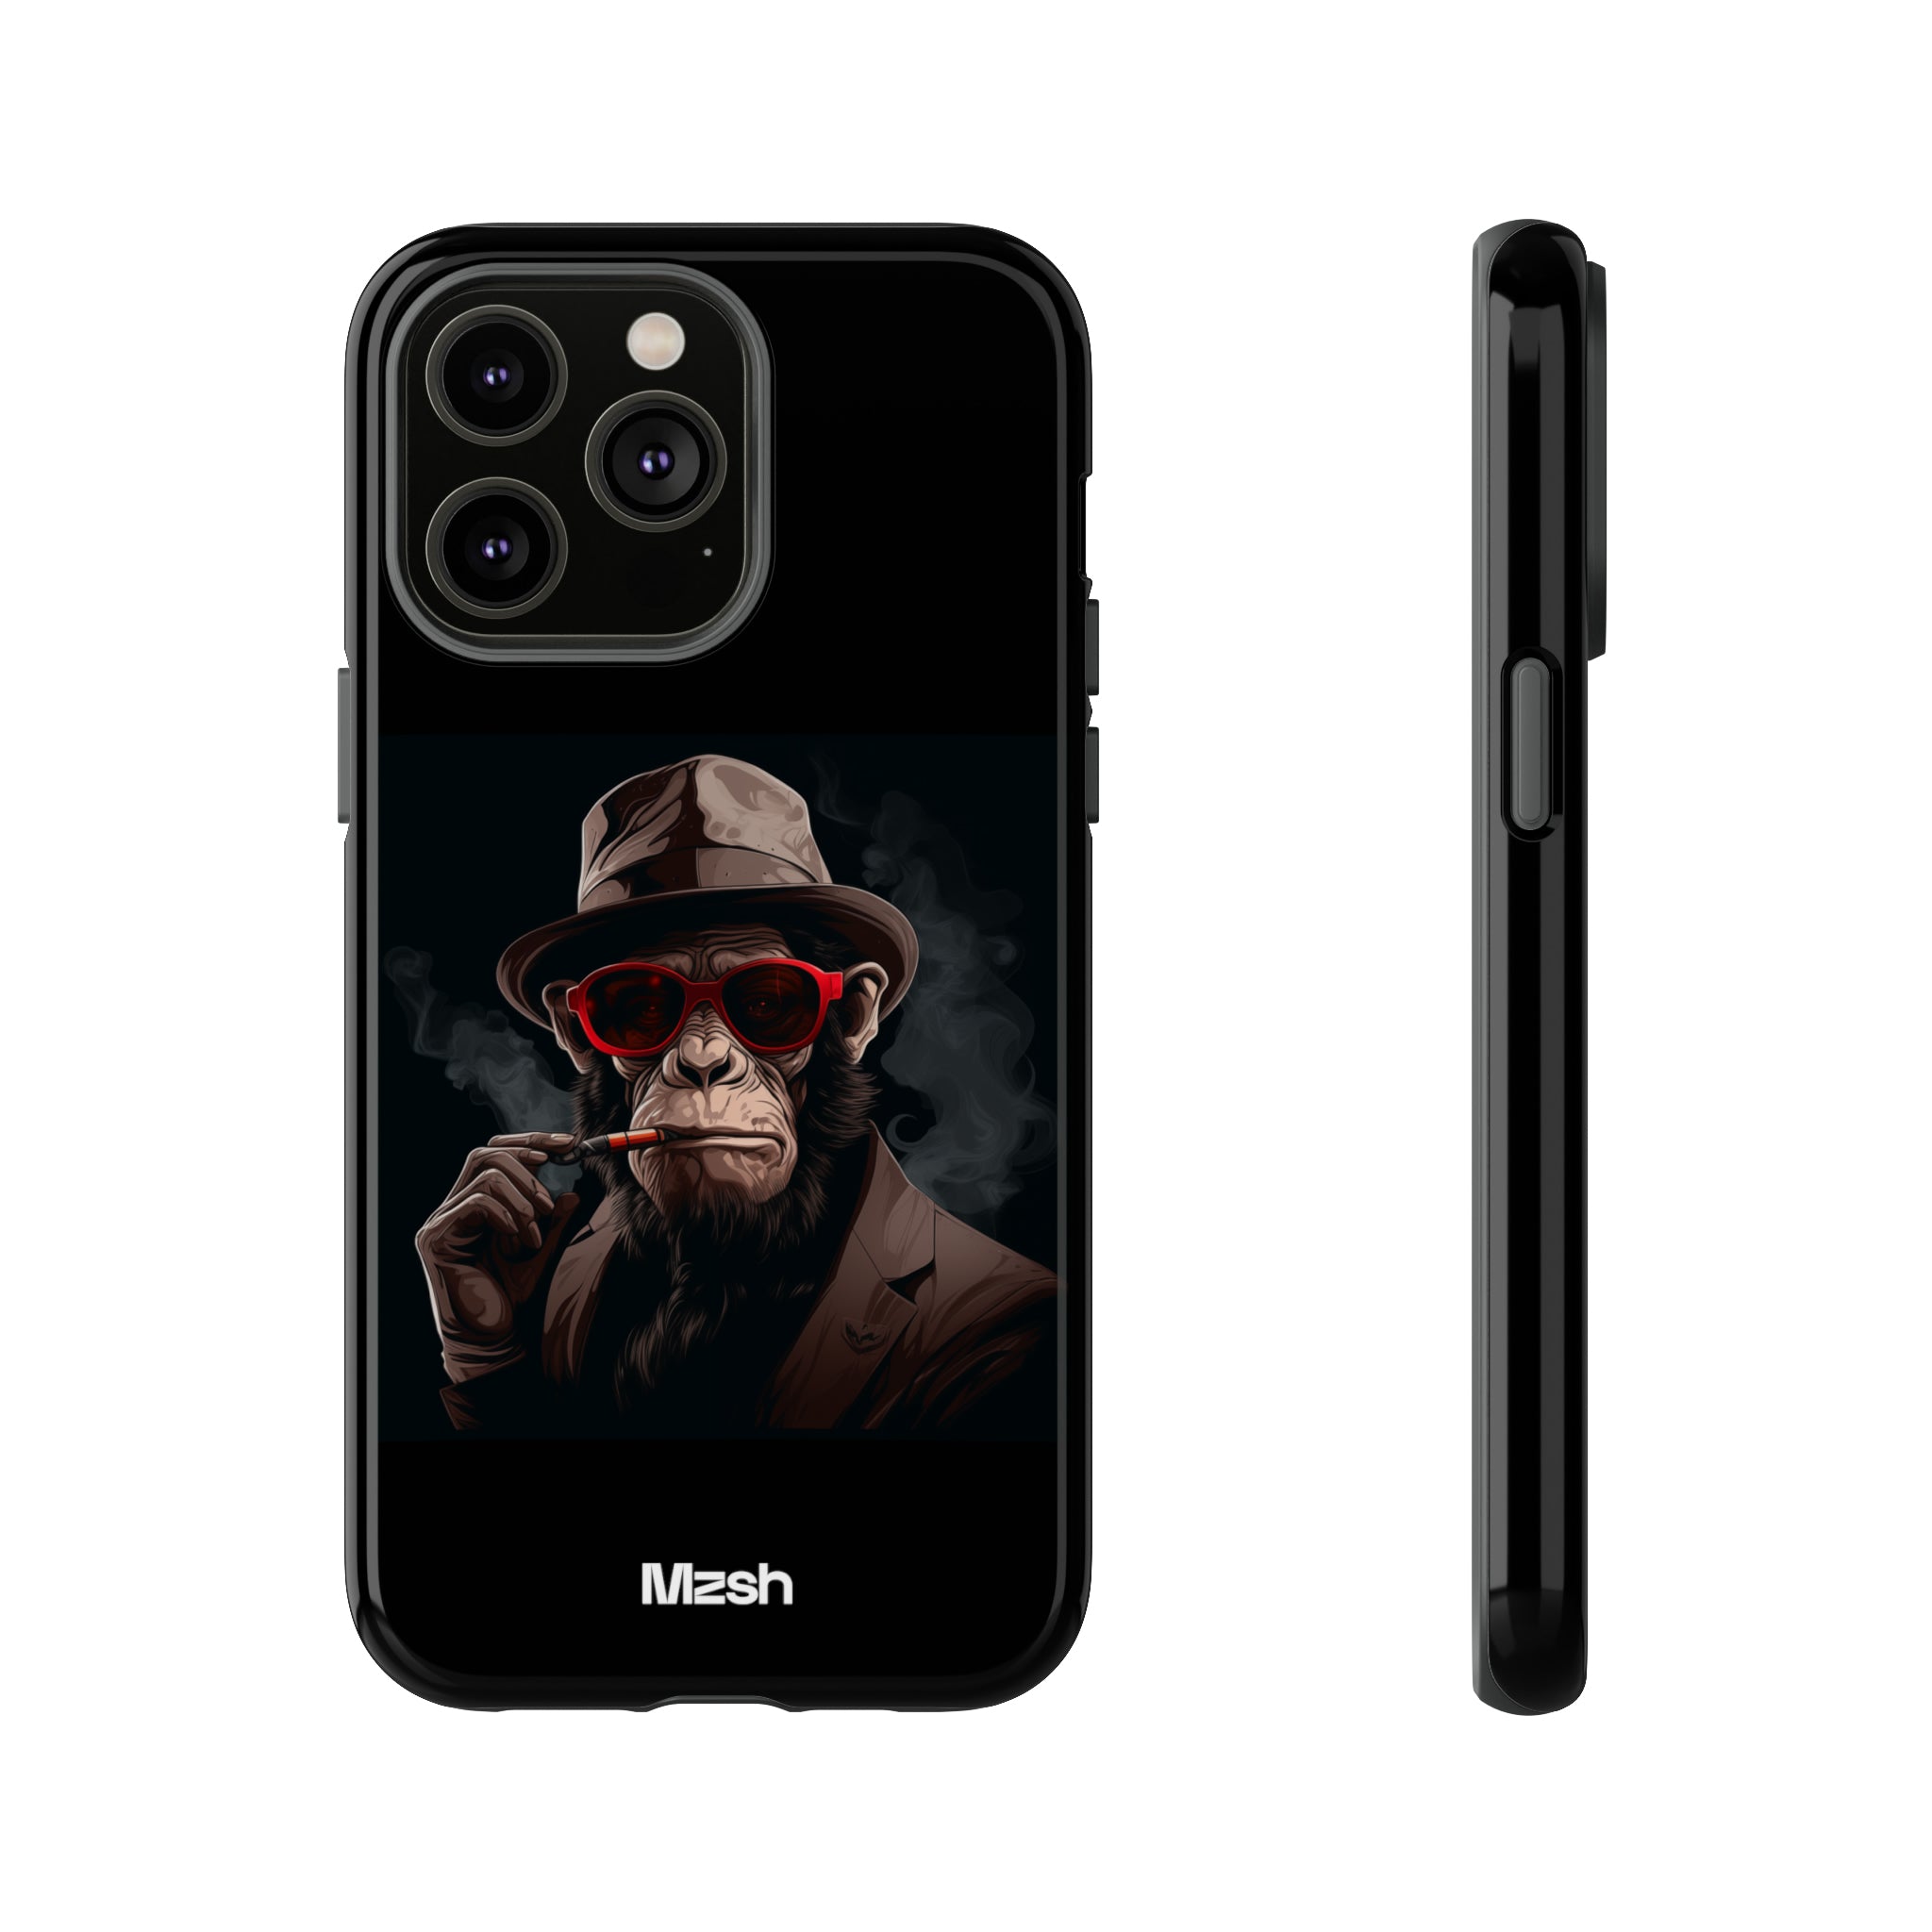 Smoking Monkey - iPhone Case